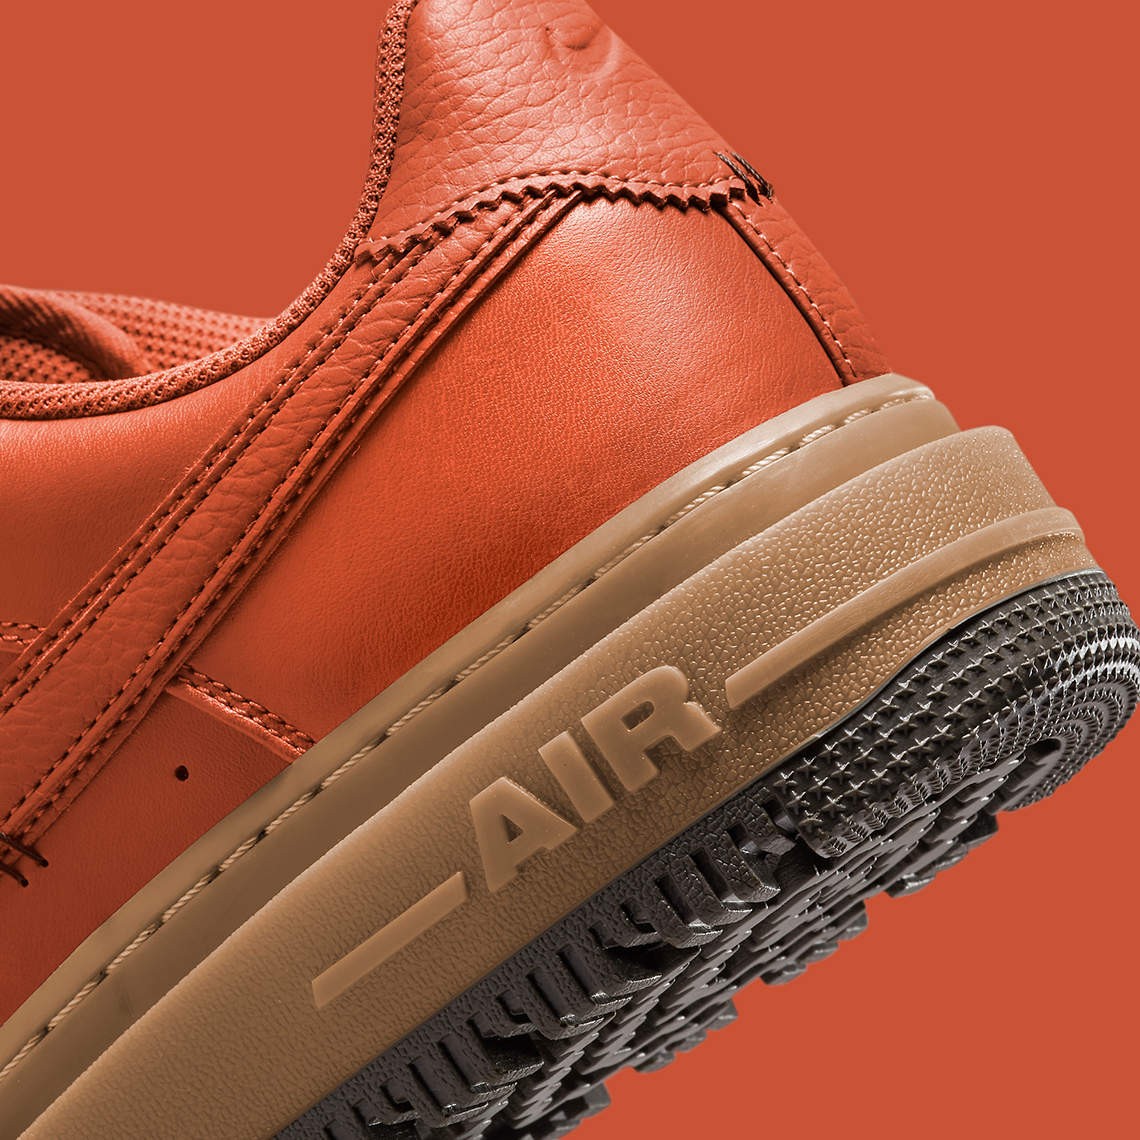 Nike Air Force 1 Luxe “Brown Basalt” Release Date